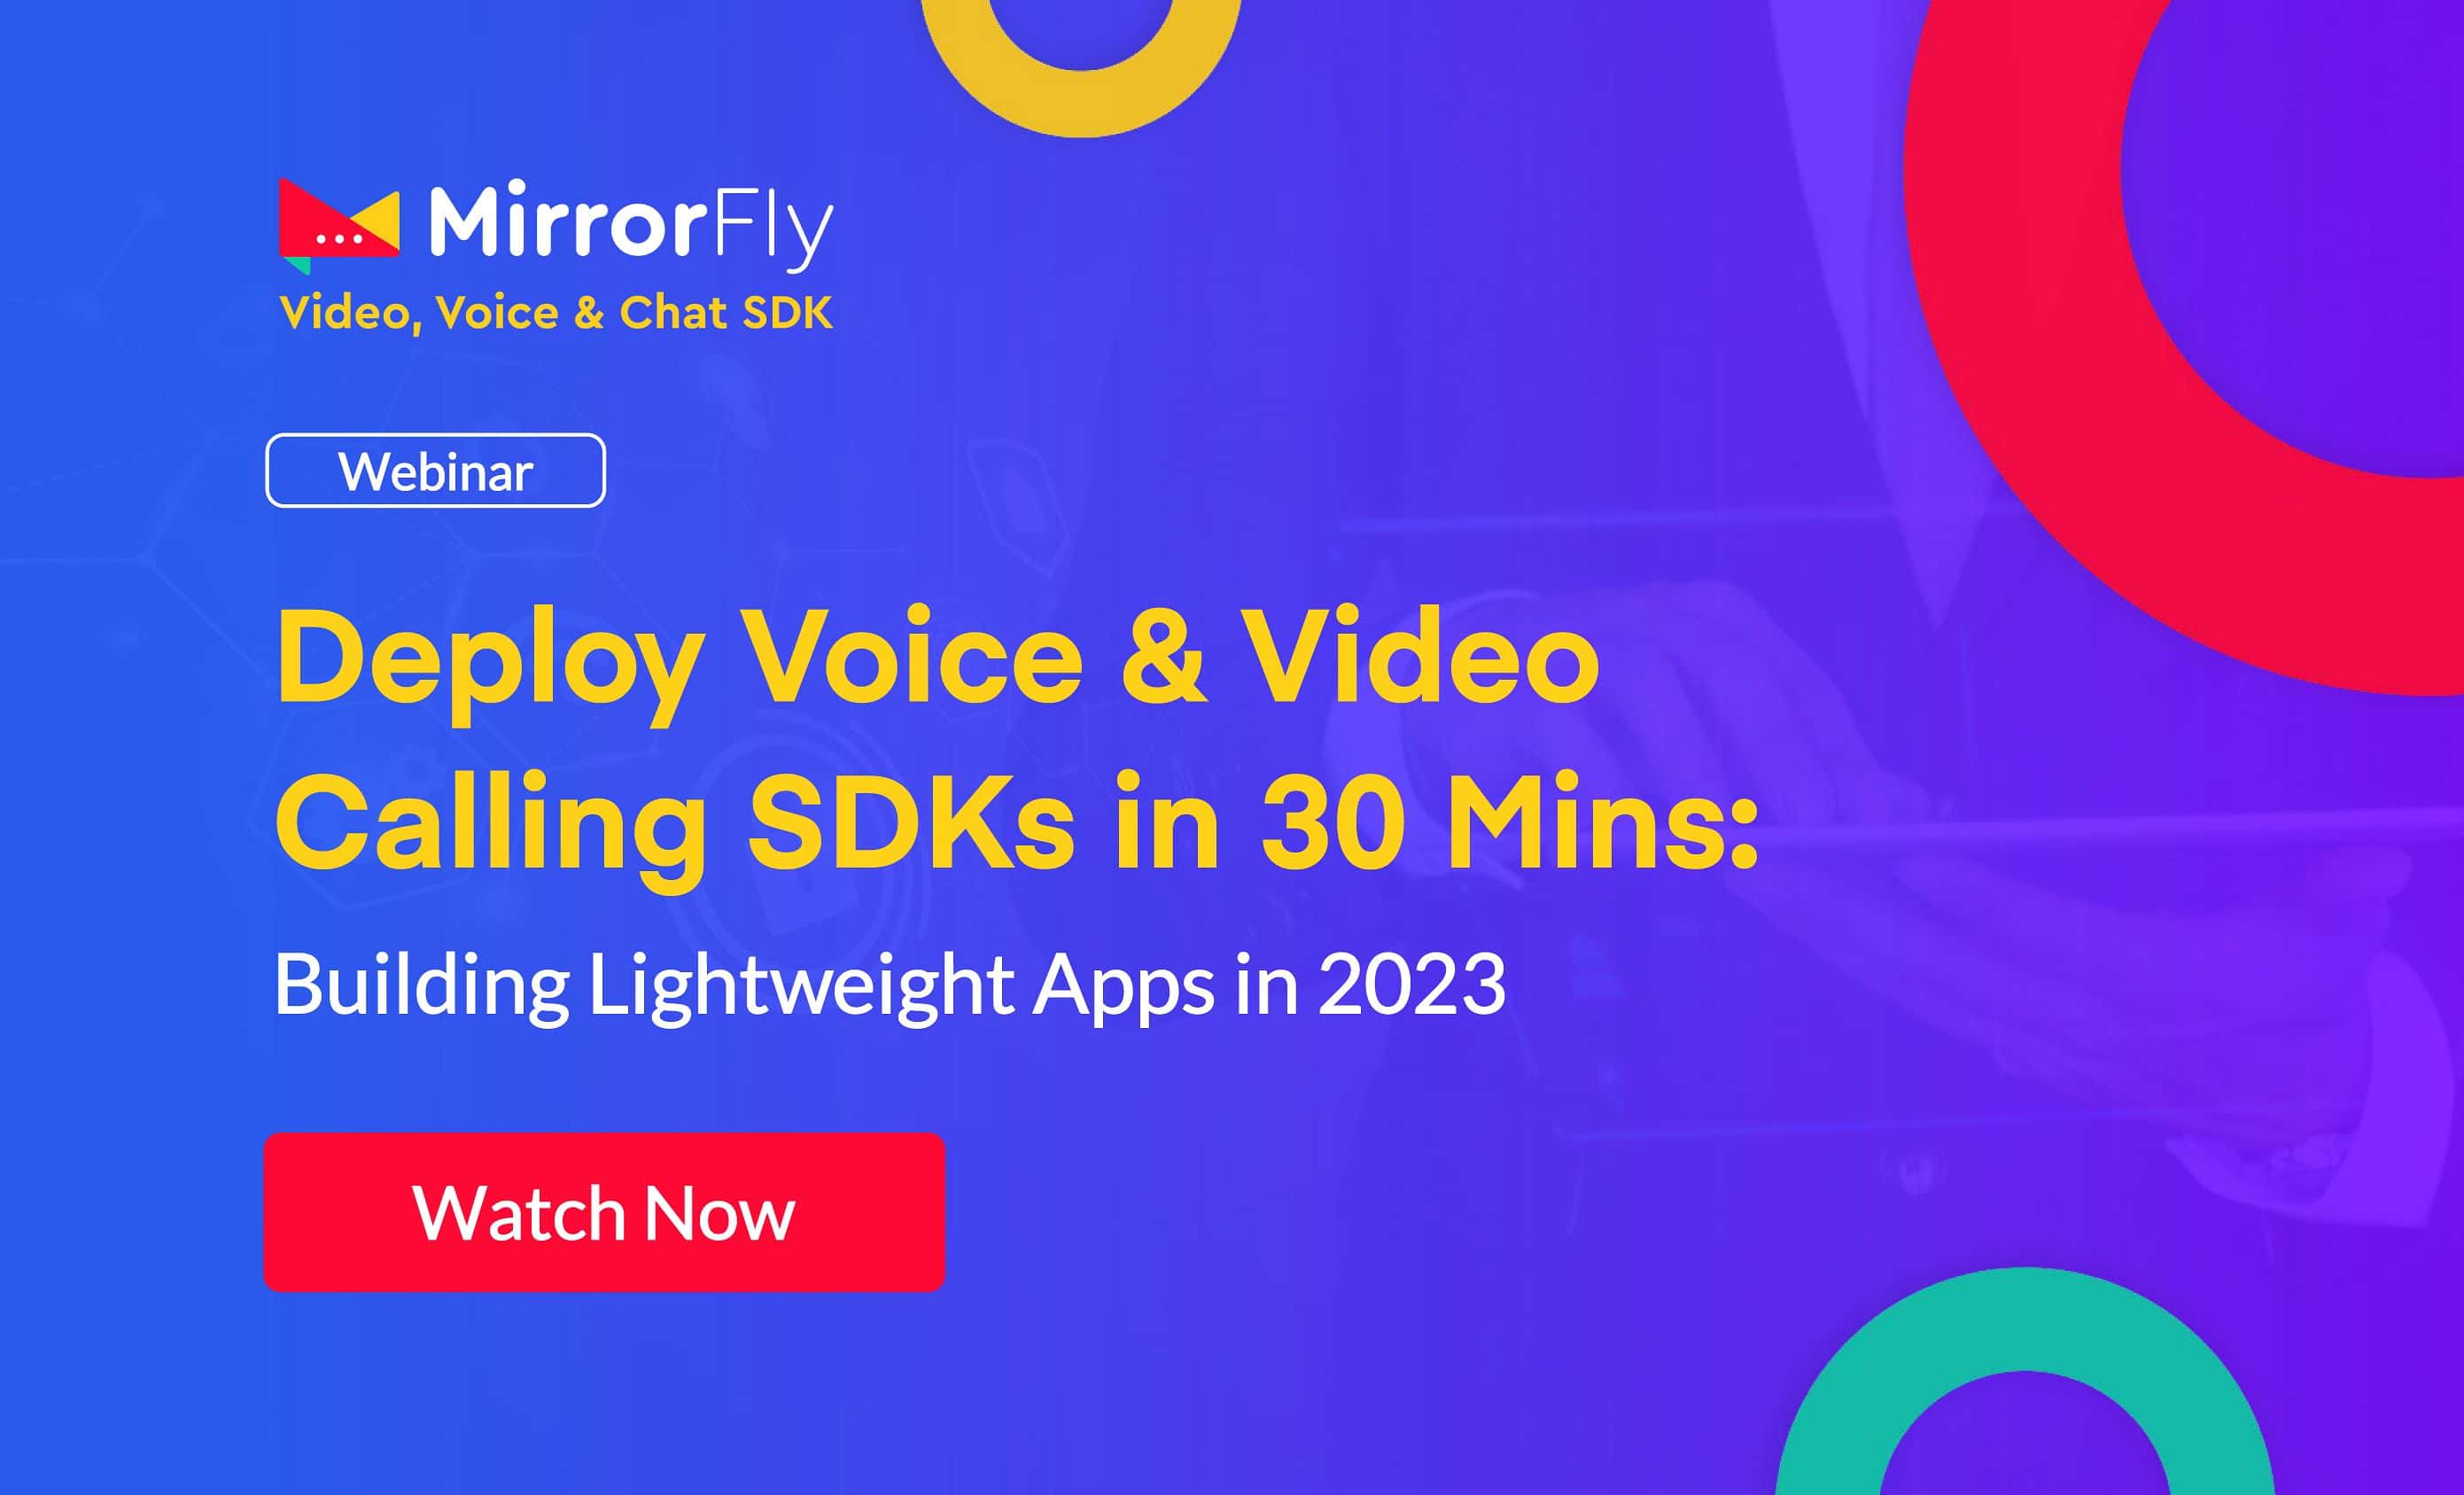 MirrorFly Webinar: Deploy Voice & Video SDKs in 30 Mins!